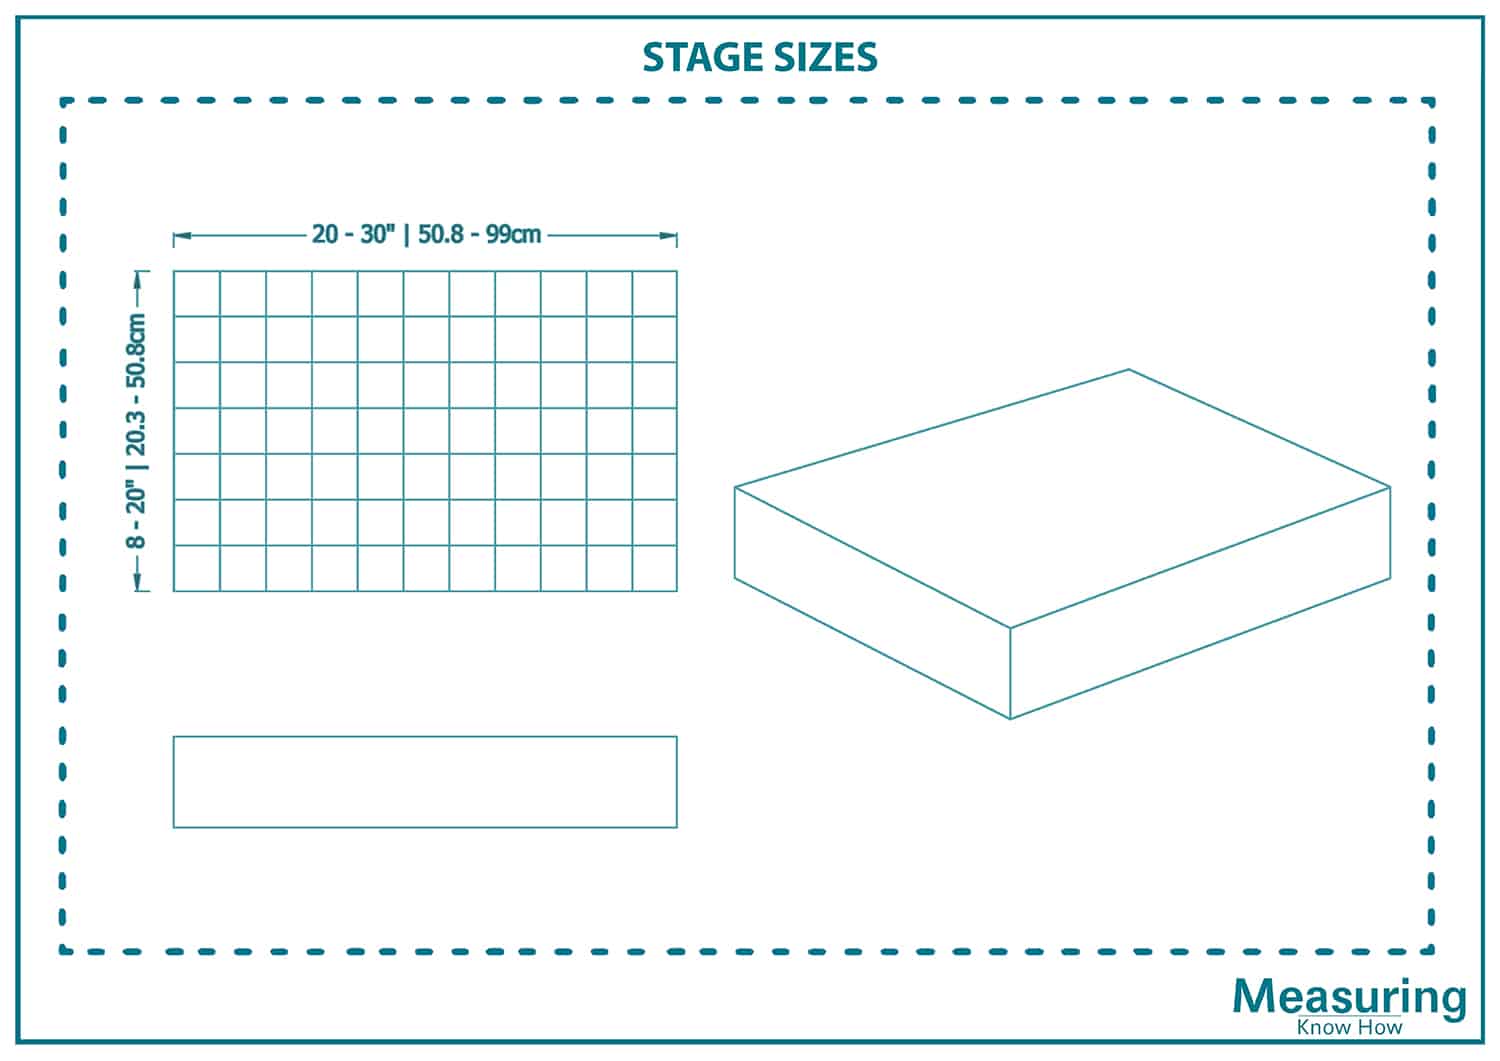 Standard stage sizes